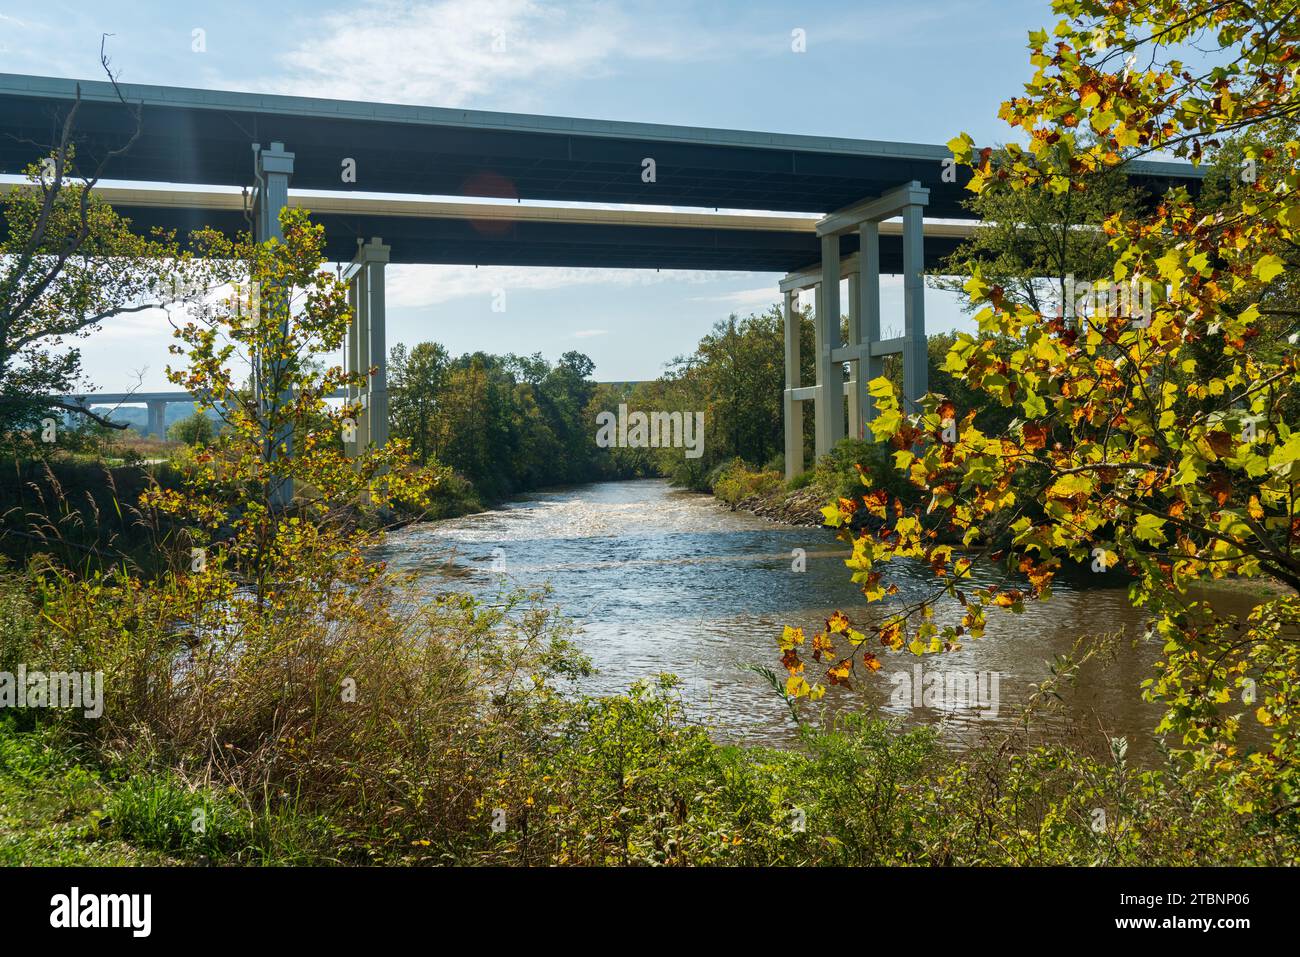 The I-80 Bridge at Cuyahoga Valley National Park in Ohio, USA Stock Photo